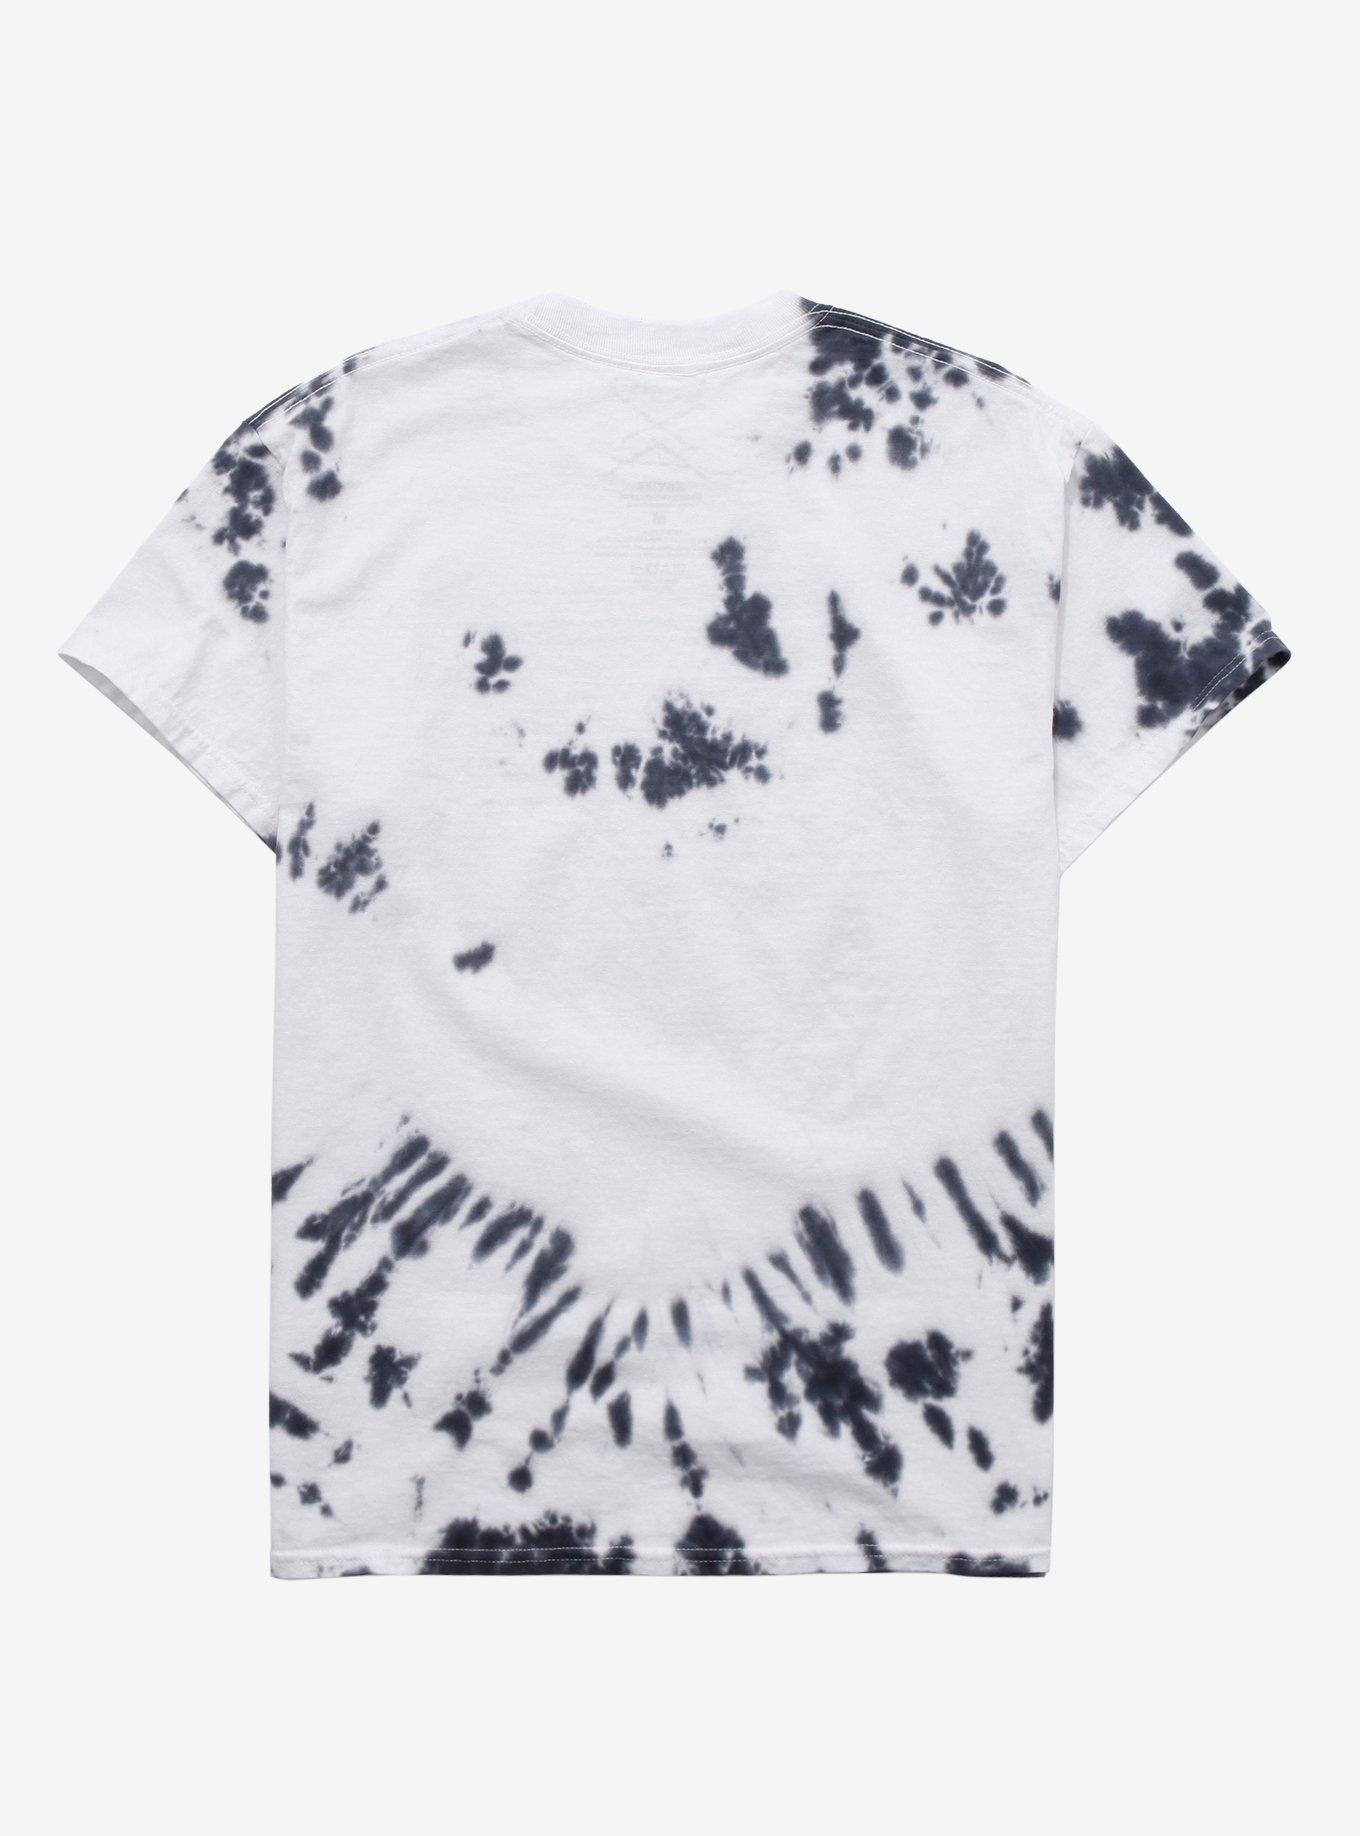 Mire Black & White Tie-Dye T-Shirt By Built From Sketch, BLACK, alternate